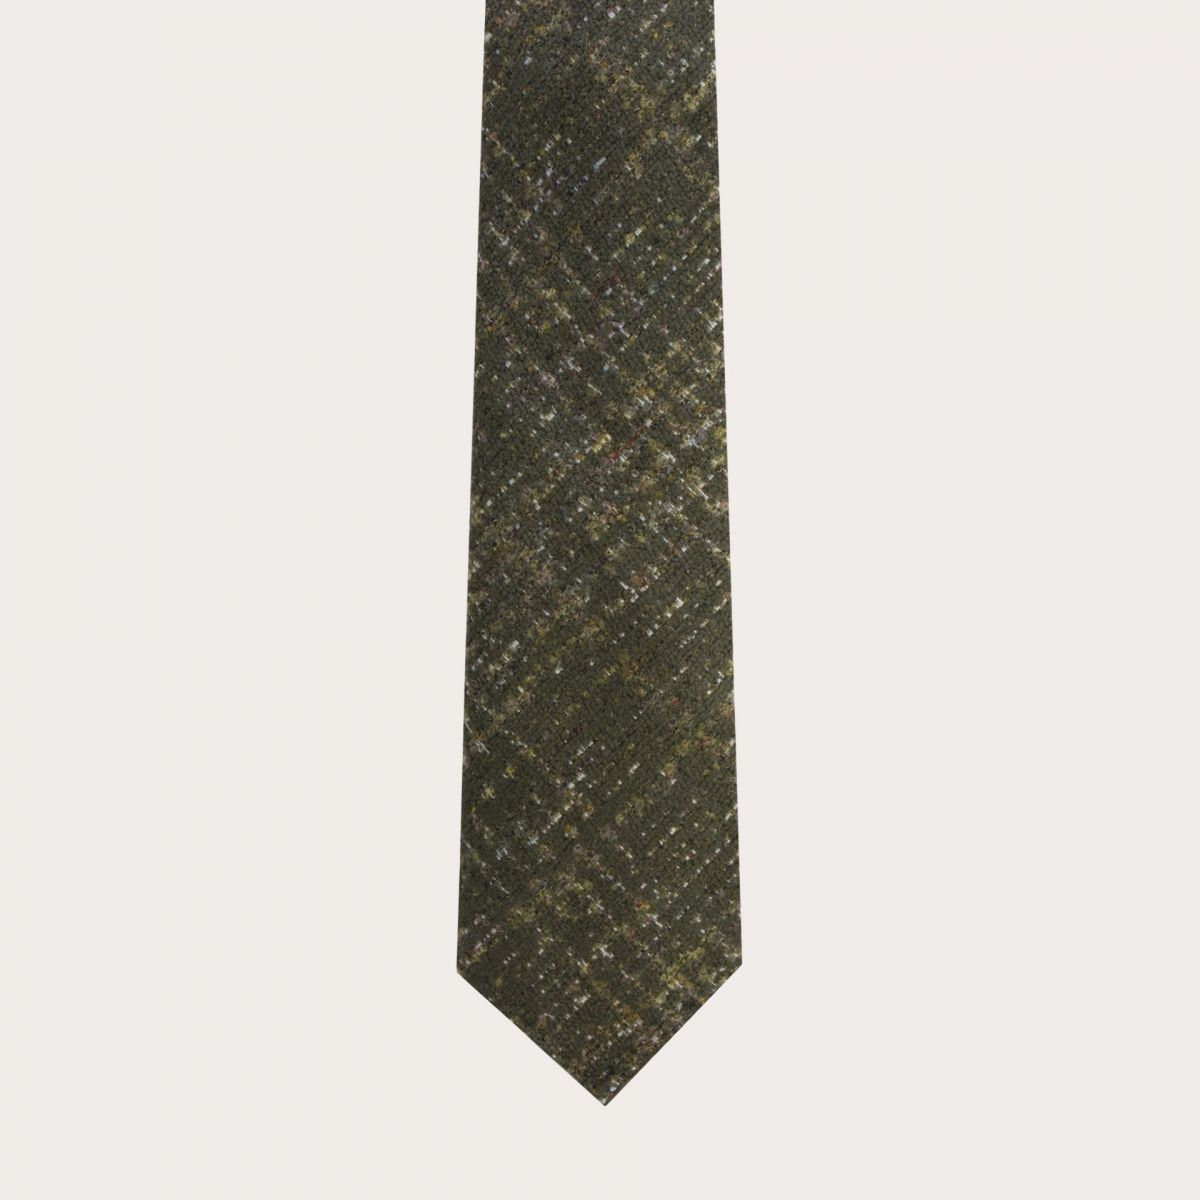 BRUCLE Ungefütterte Krawatte tartanmuster grun